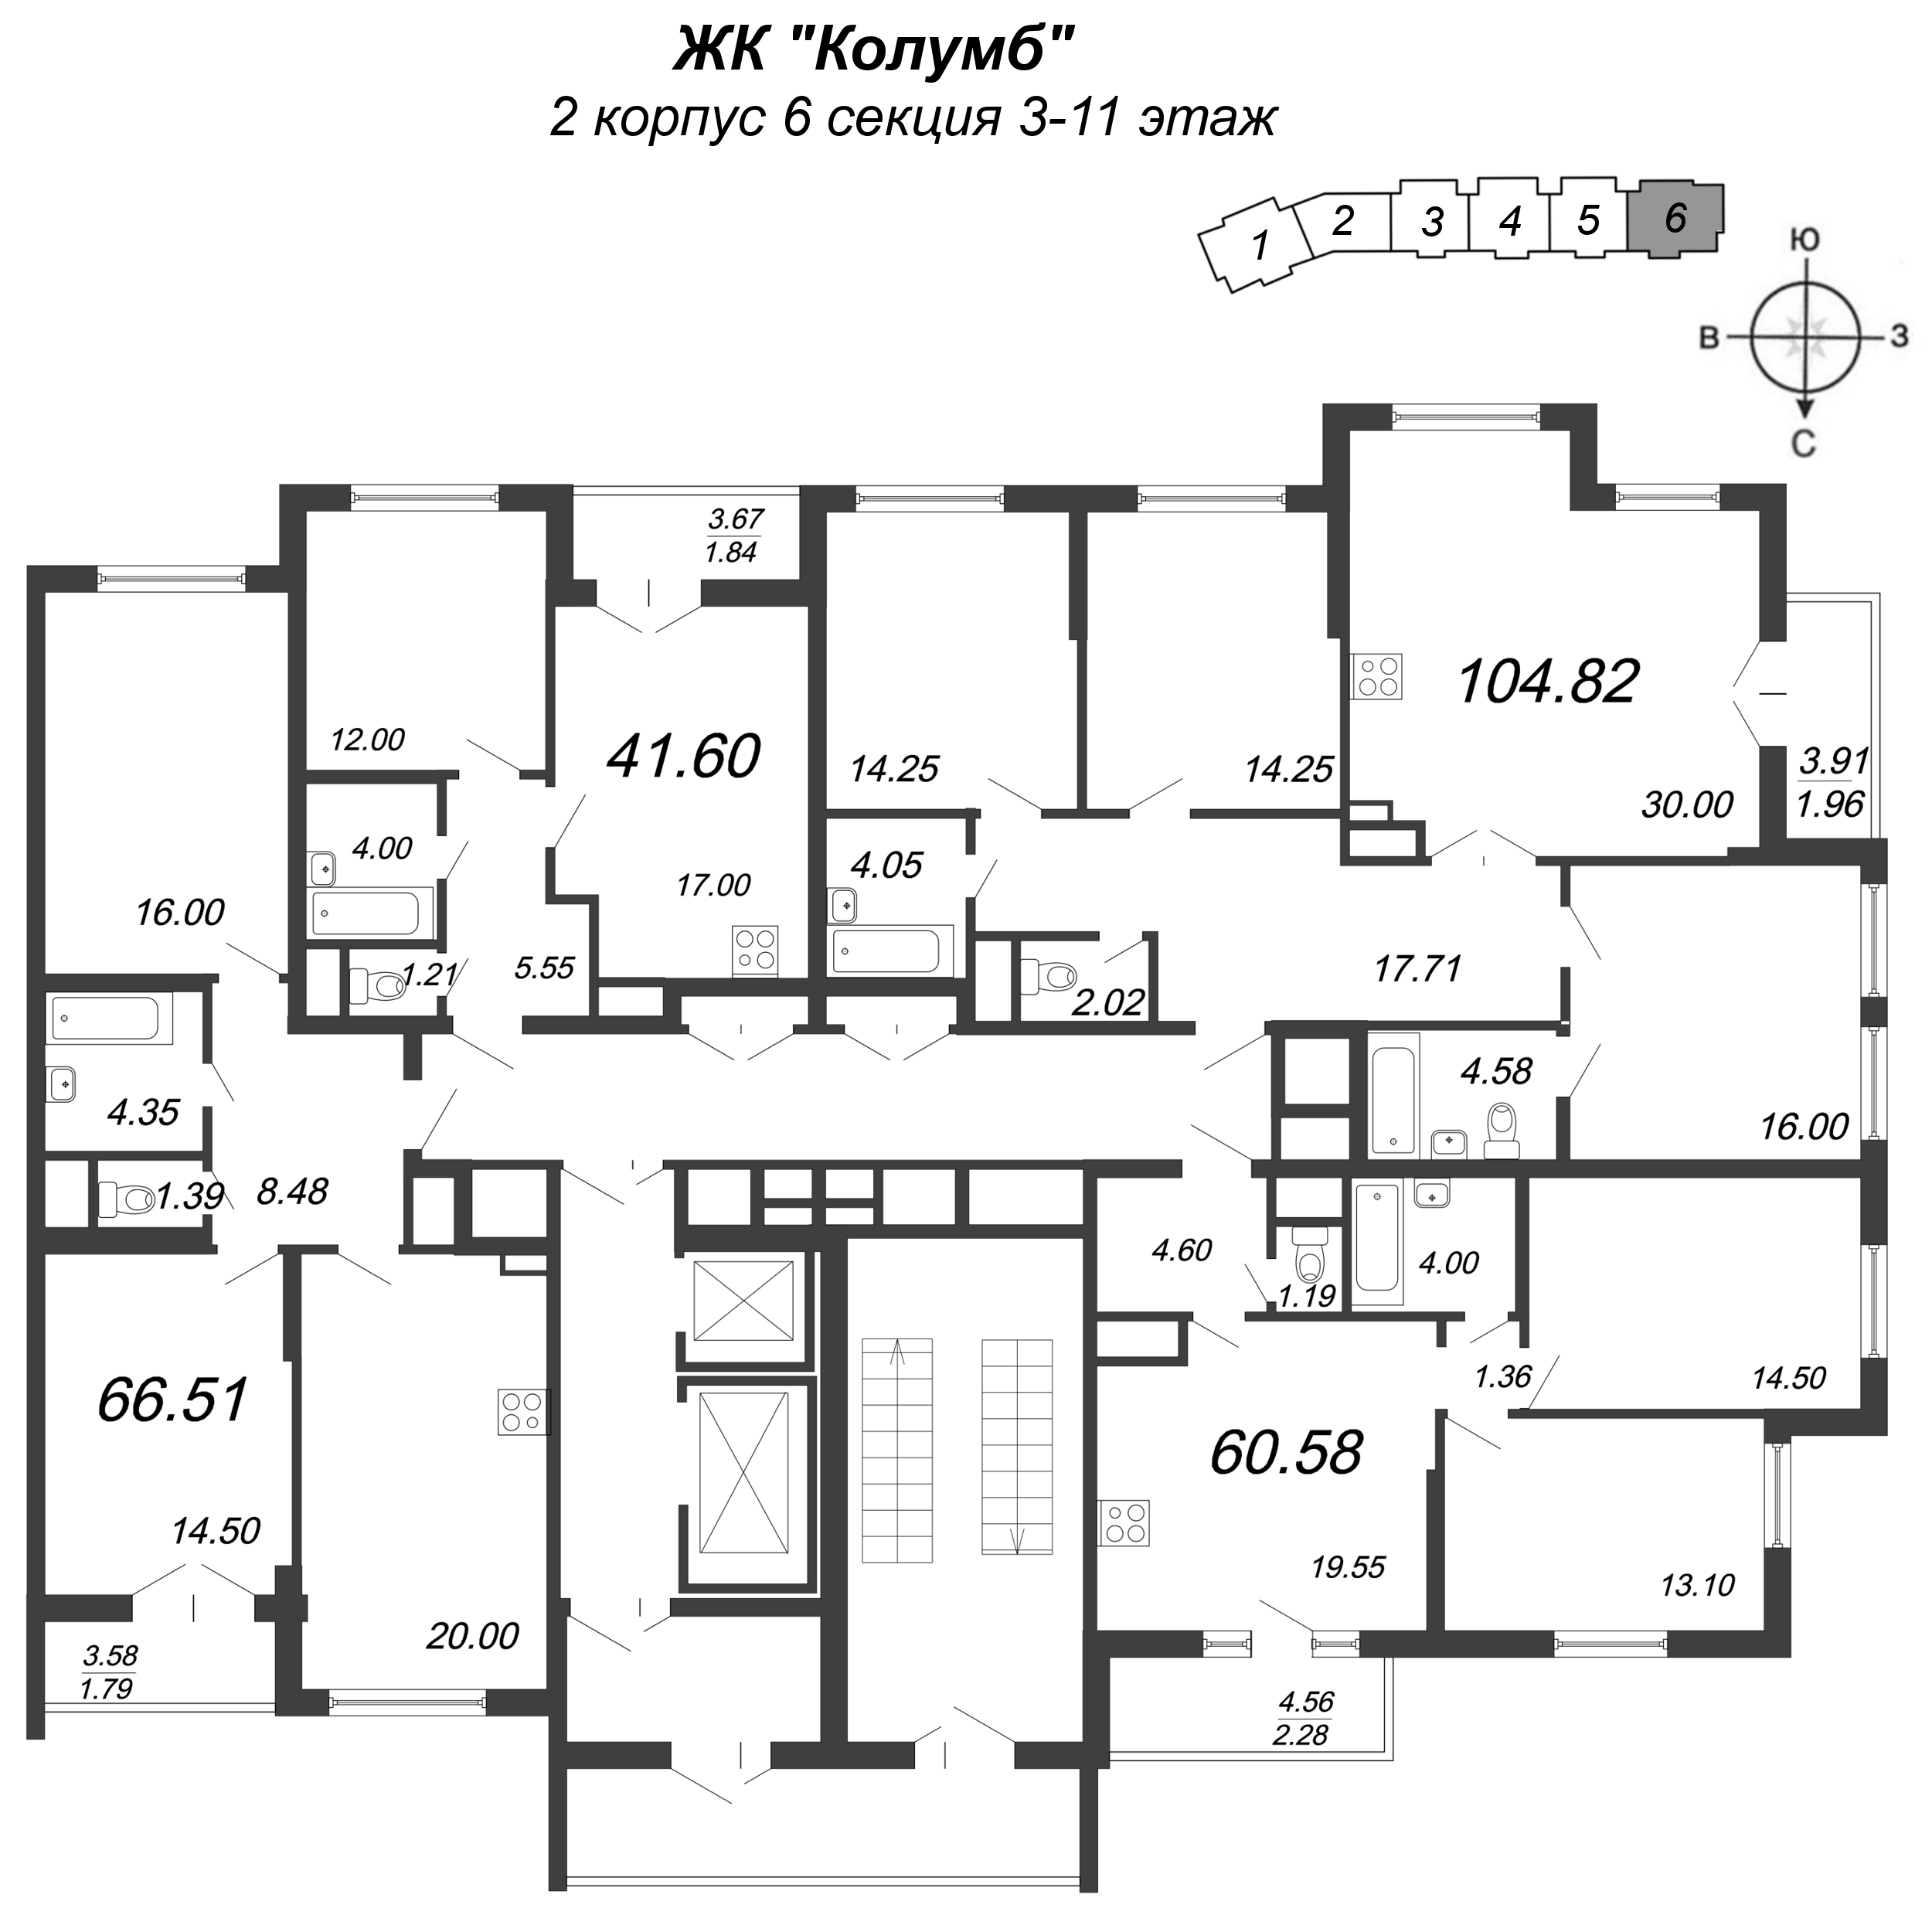 4-комнатная (Евро) квартира, 105.2 м² - планировка этажа